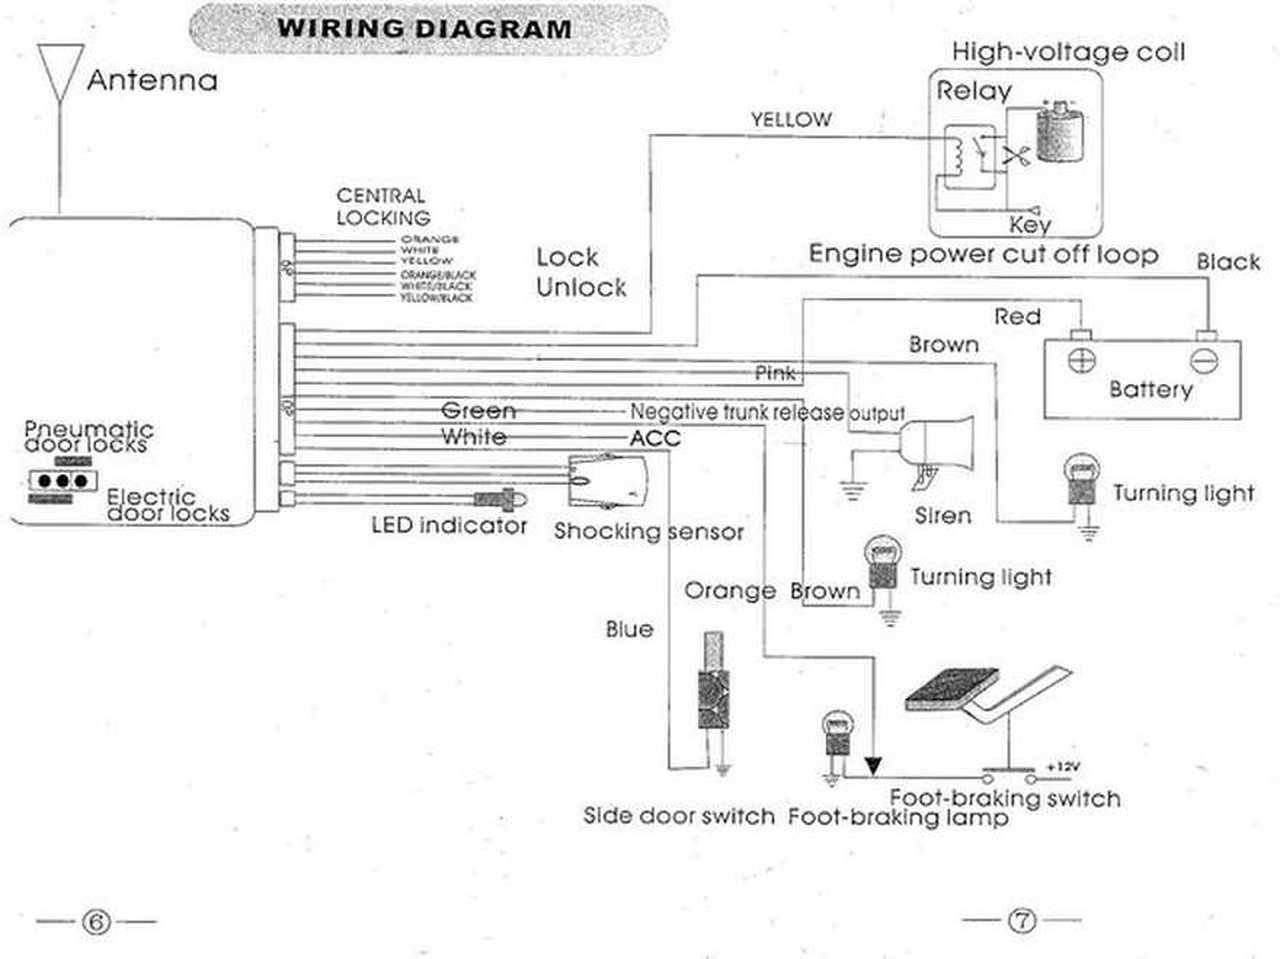 Remote Central Locking Wiring Diagram 28